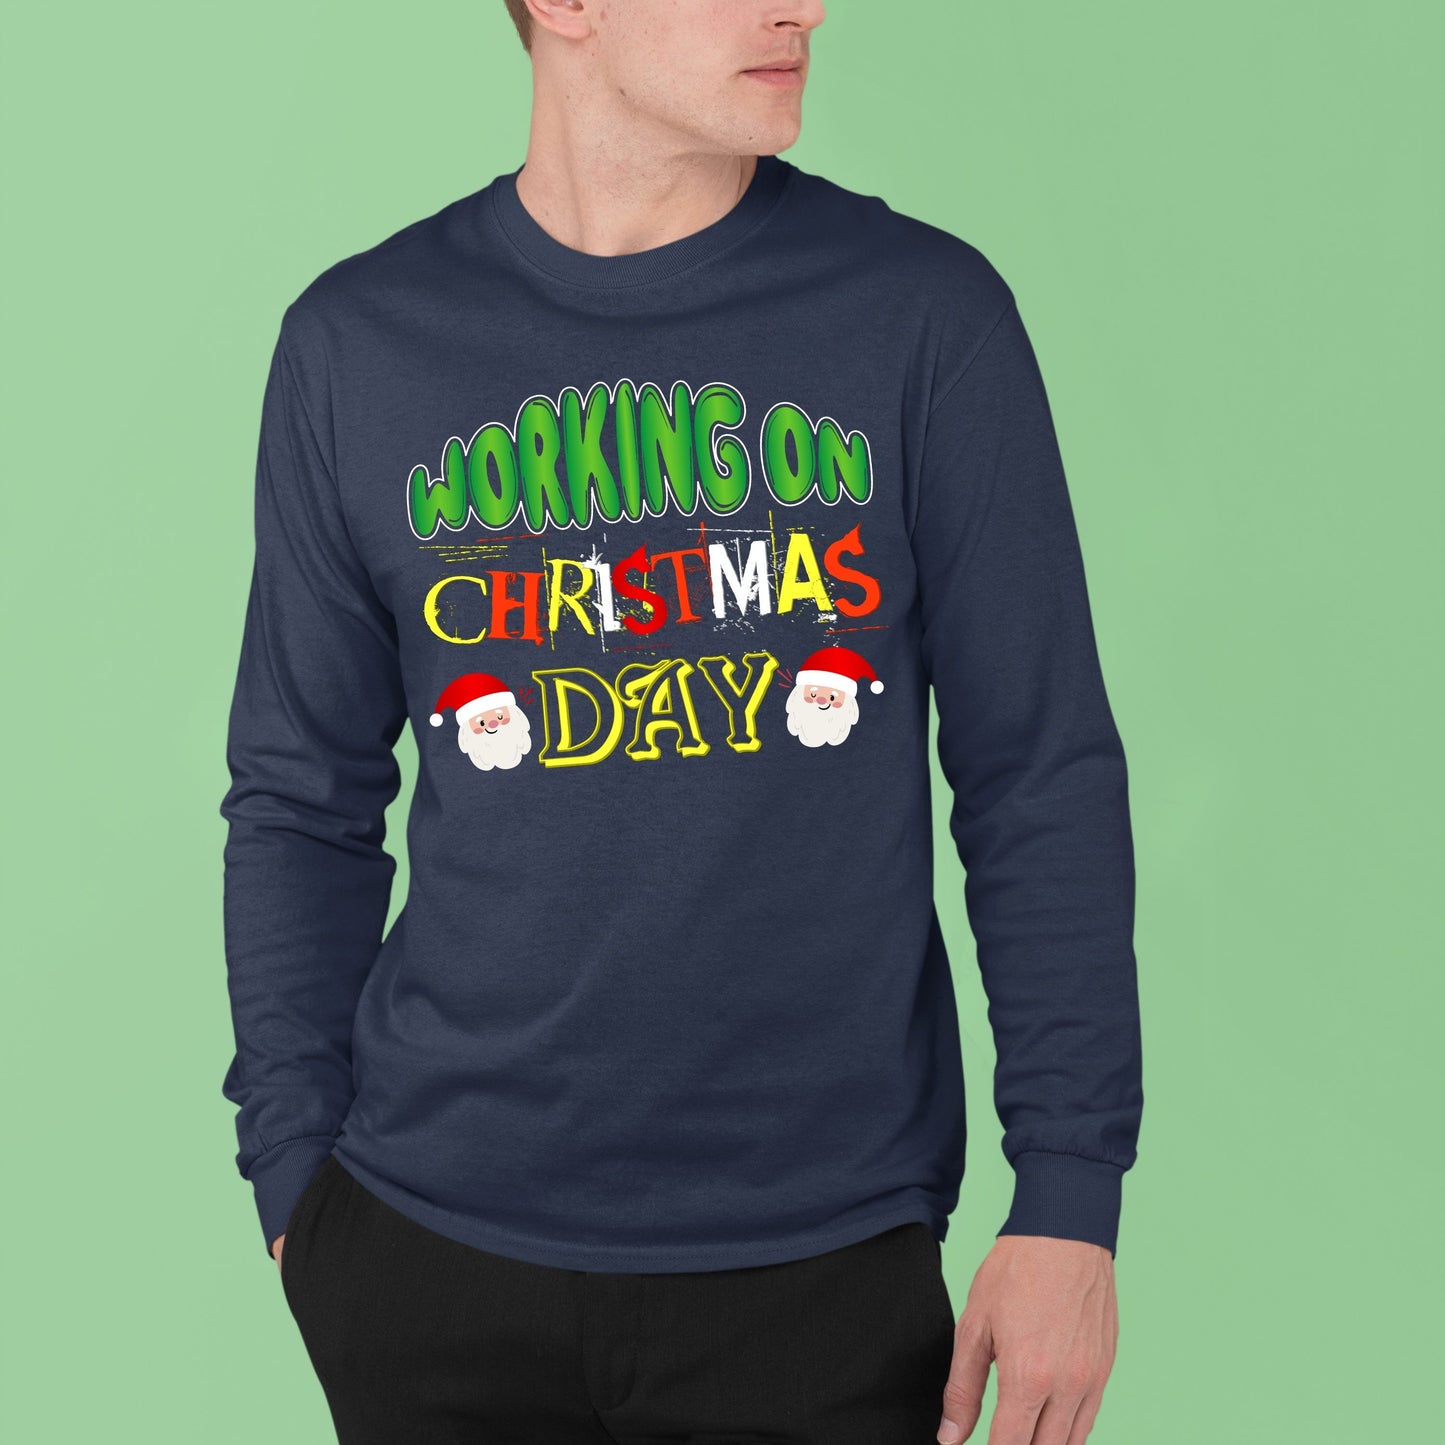 Working on Chirstmas day , Doctor Shirt,  School TShirt, 2022 Christmas, Doctor Gift for Him, Christmas Shirt, Christmas Sweatshirt,